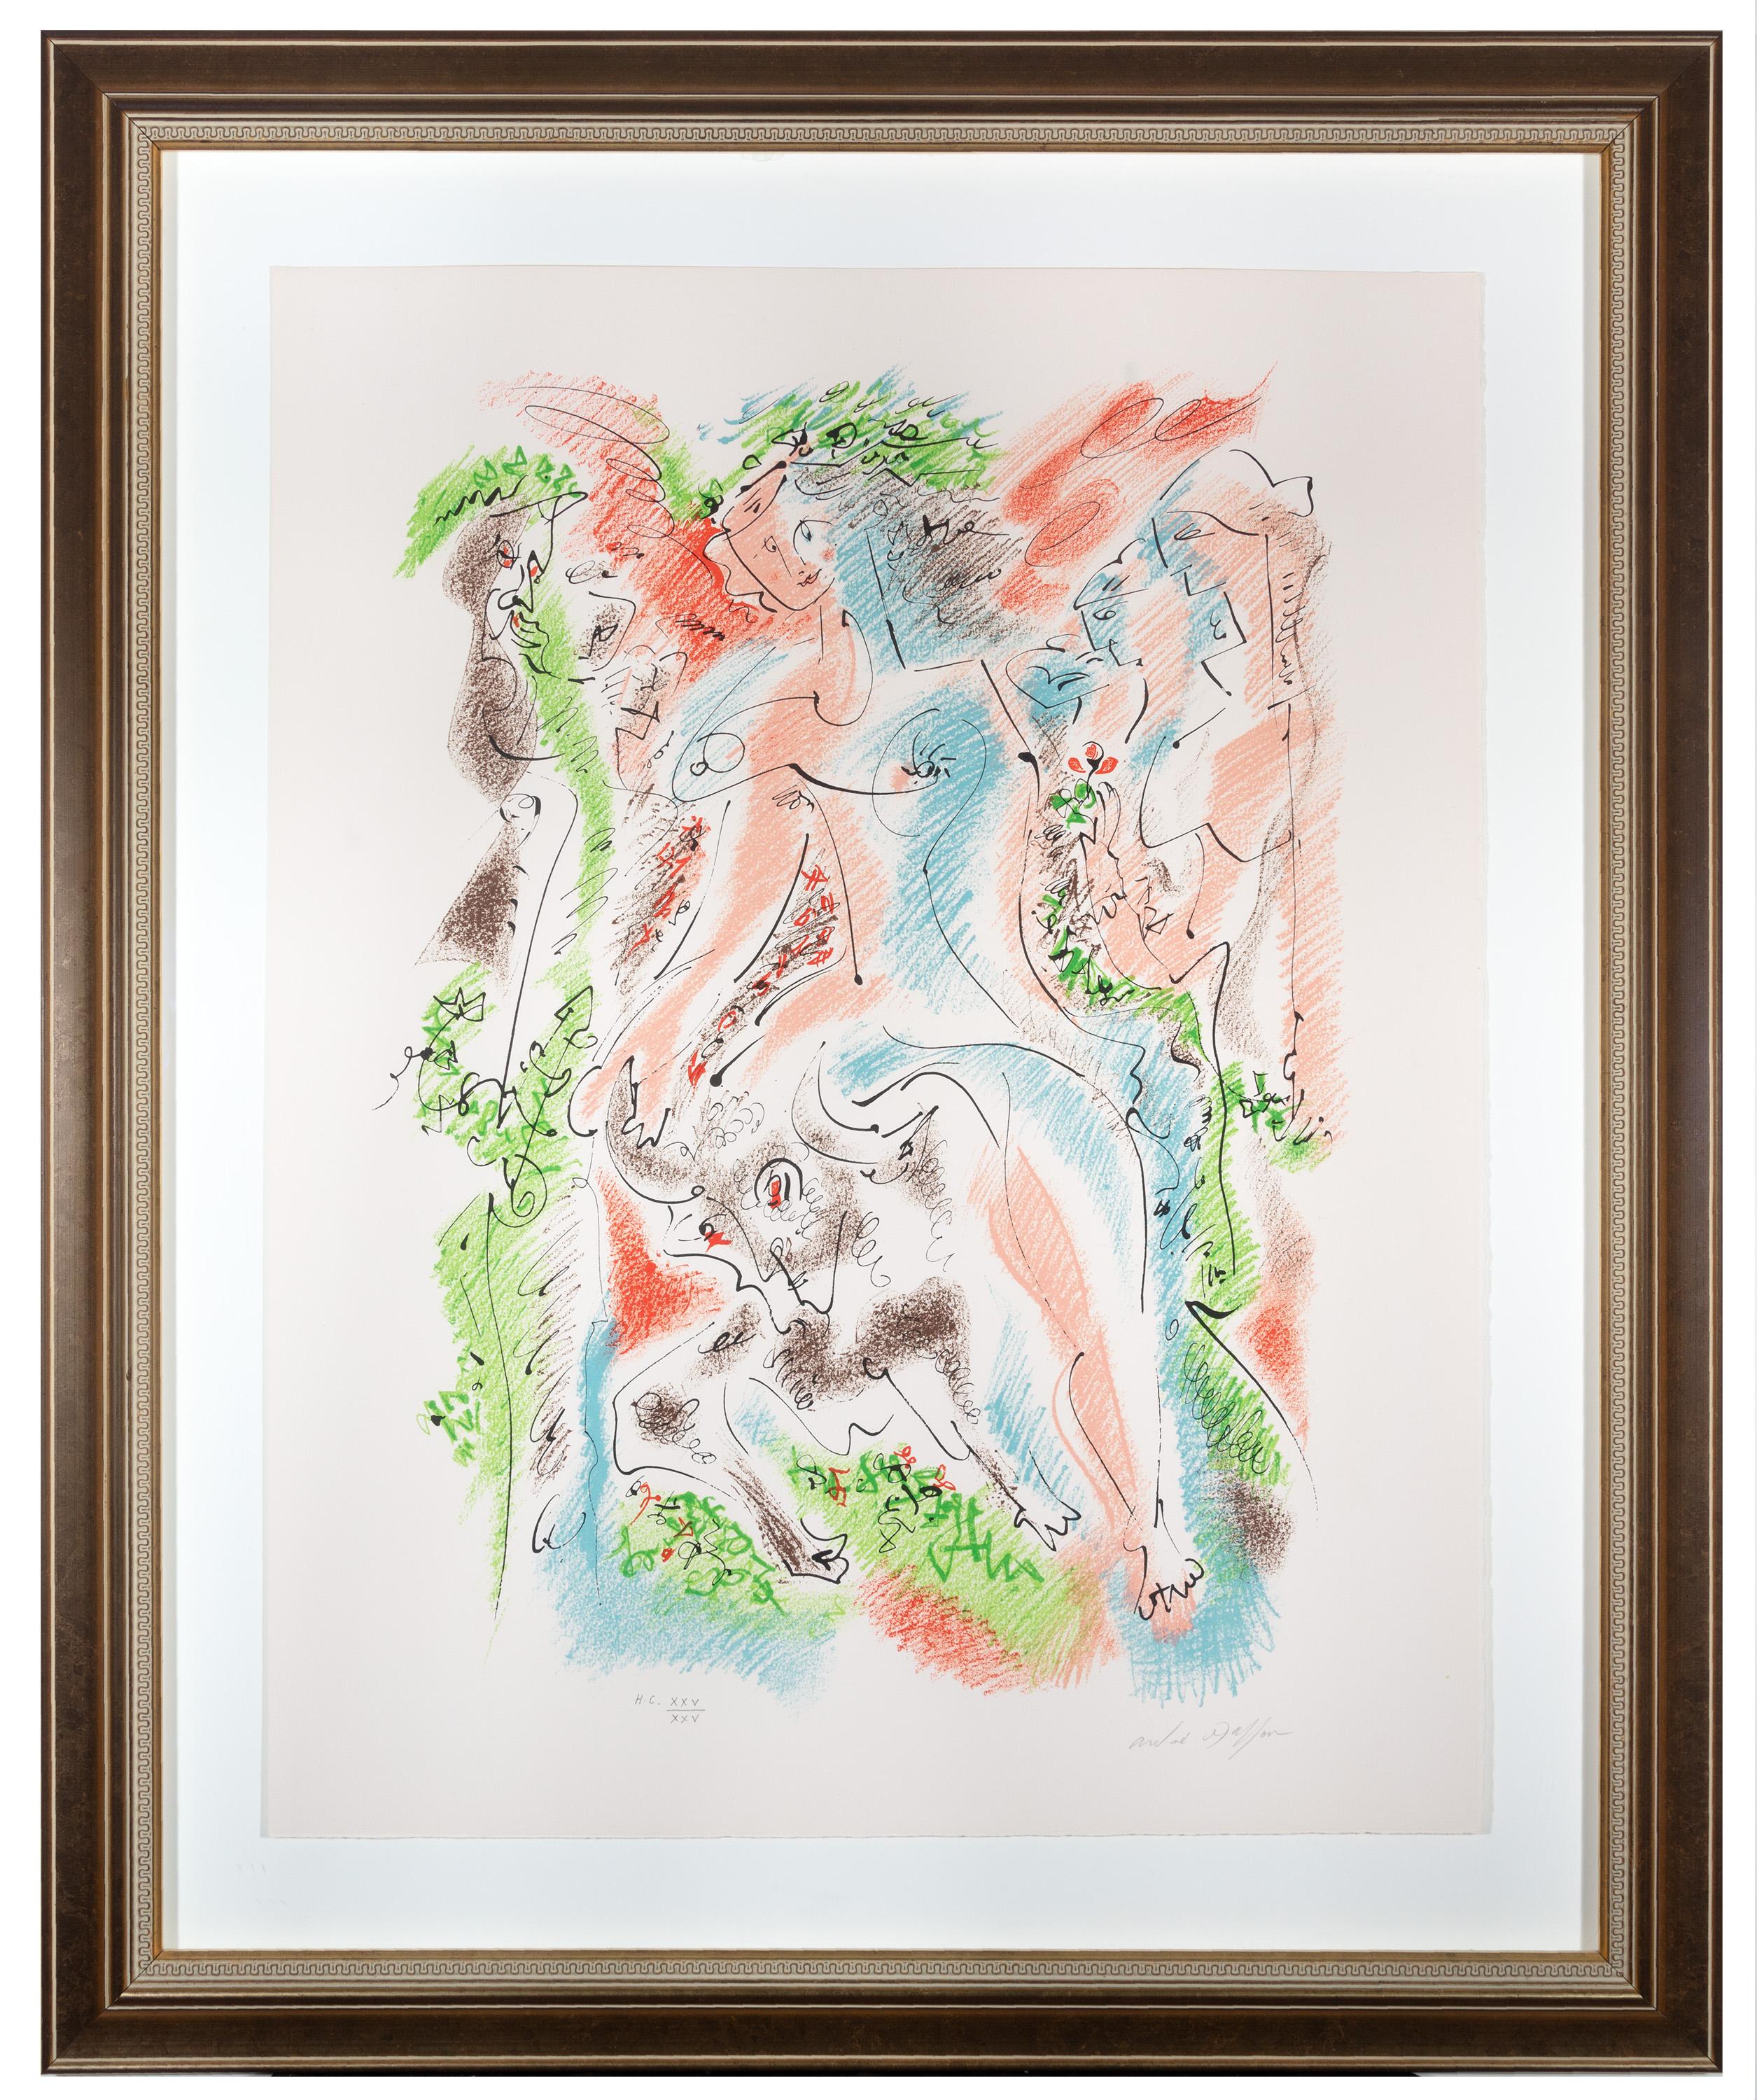 André Masson Abstract Print - "Bacchanale from Je Reve (I Dream) Portfolio, " Original Color Lithograph